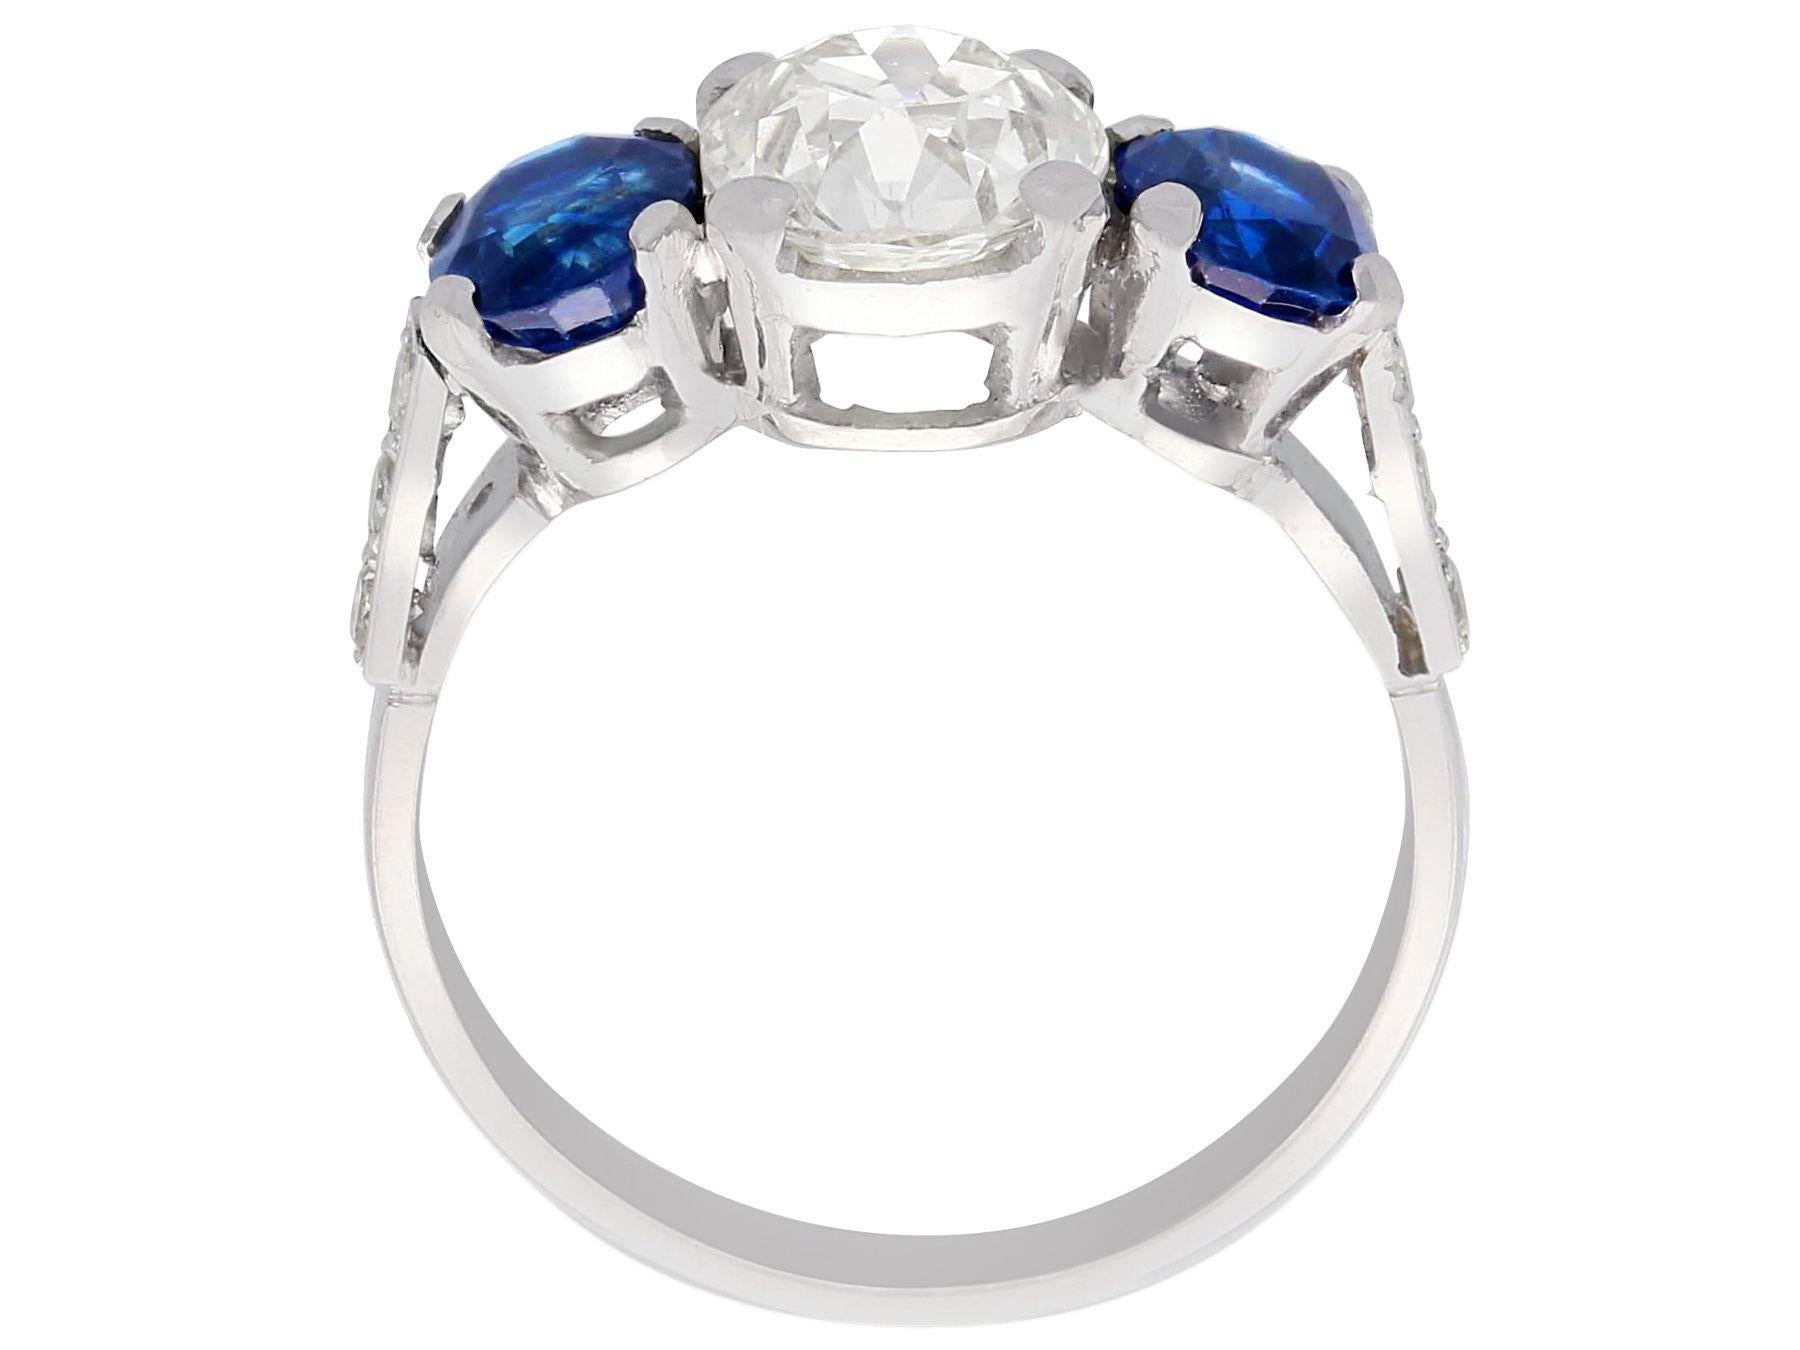 Oval Cut 1.62 Carat Sapphire and 1.86 Carat Diamond Trilogy Ring